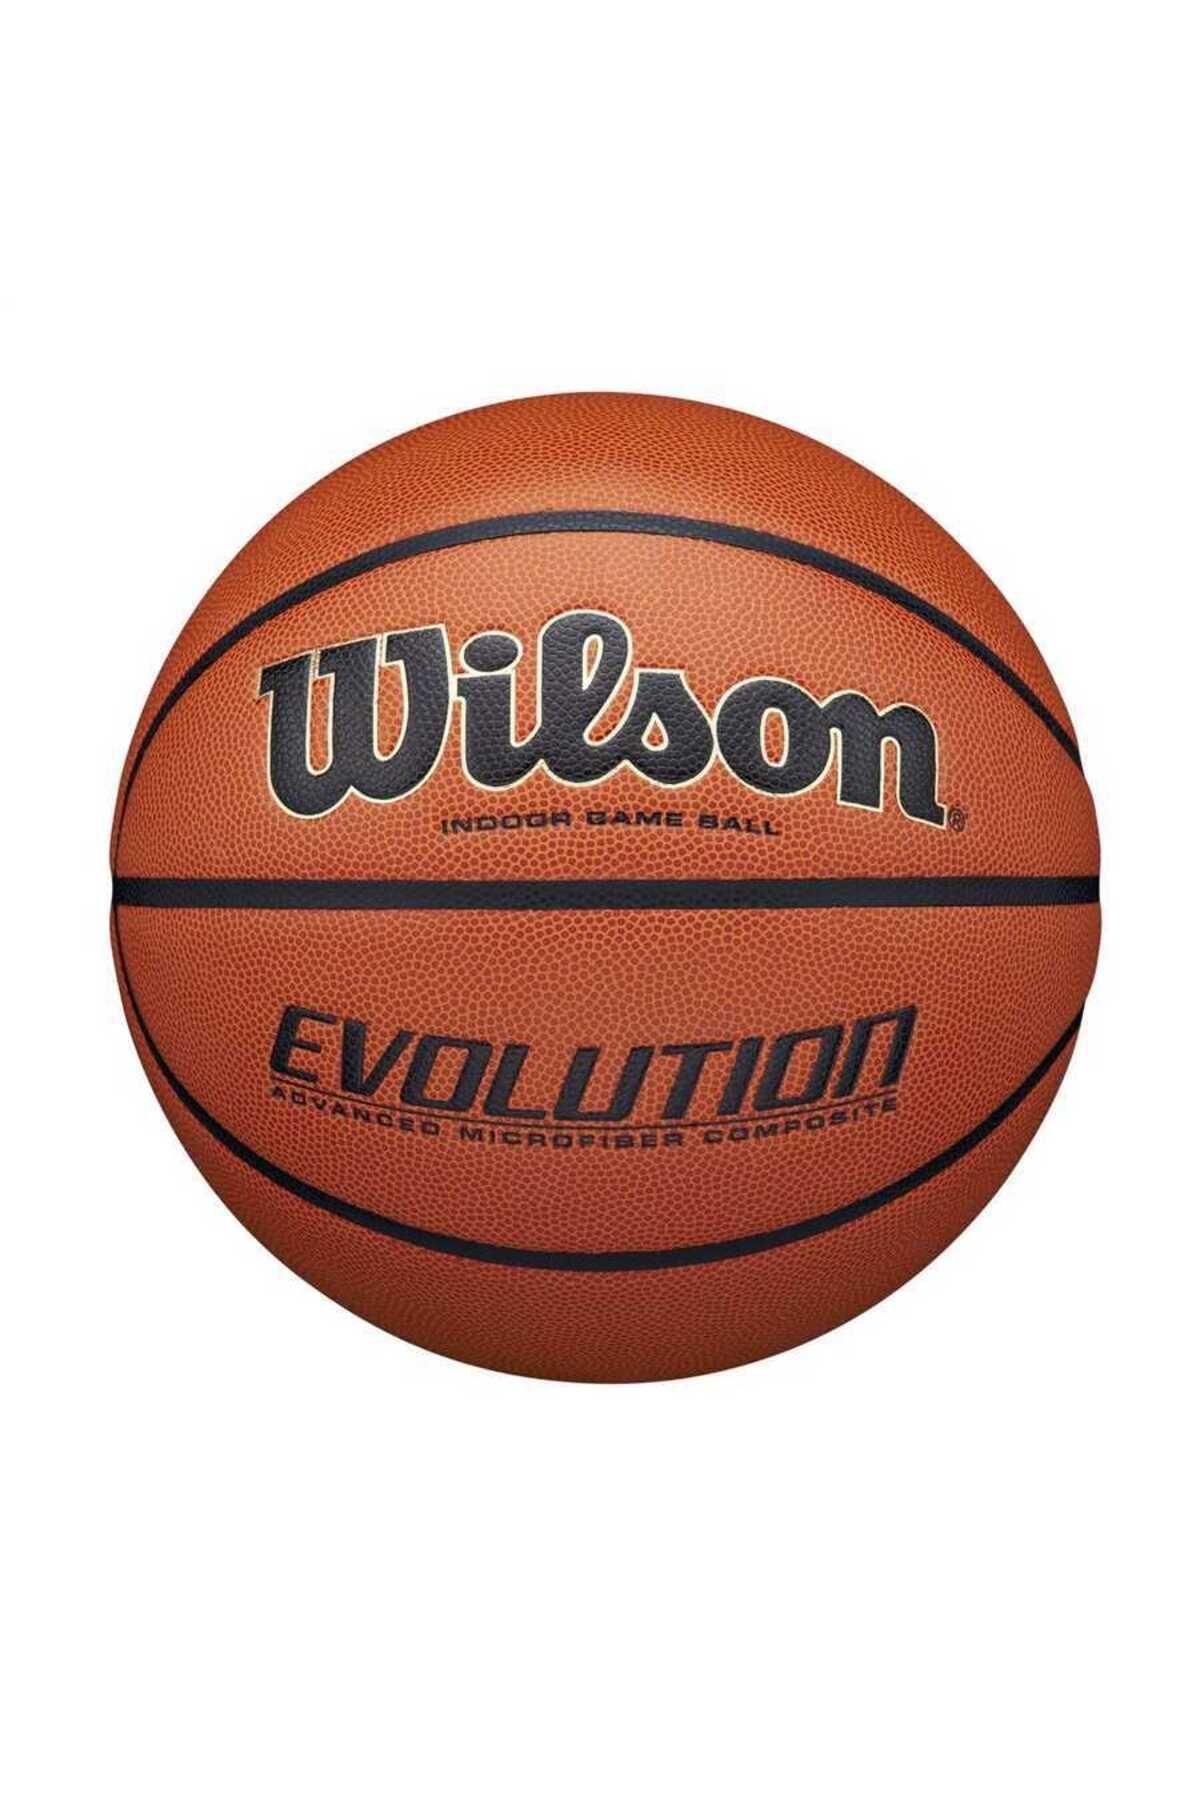 Wilson Evolution Emea Basketbol Topu Wtb0586xbemea